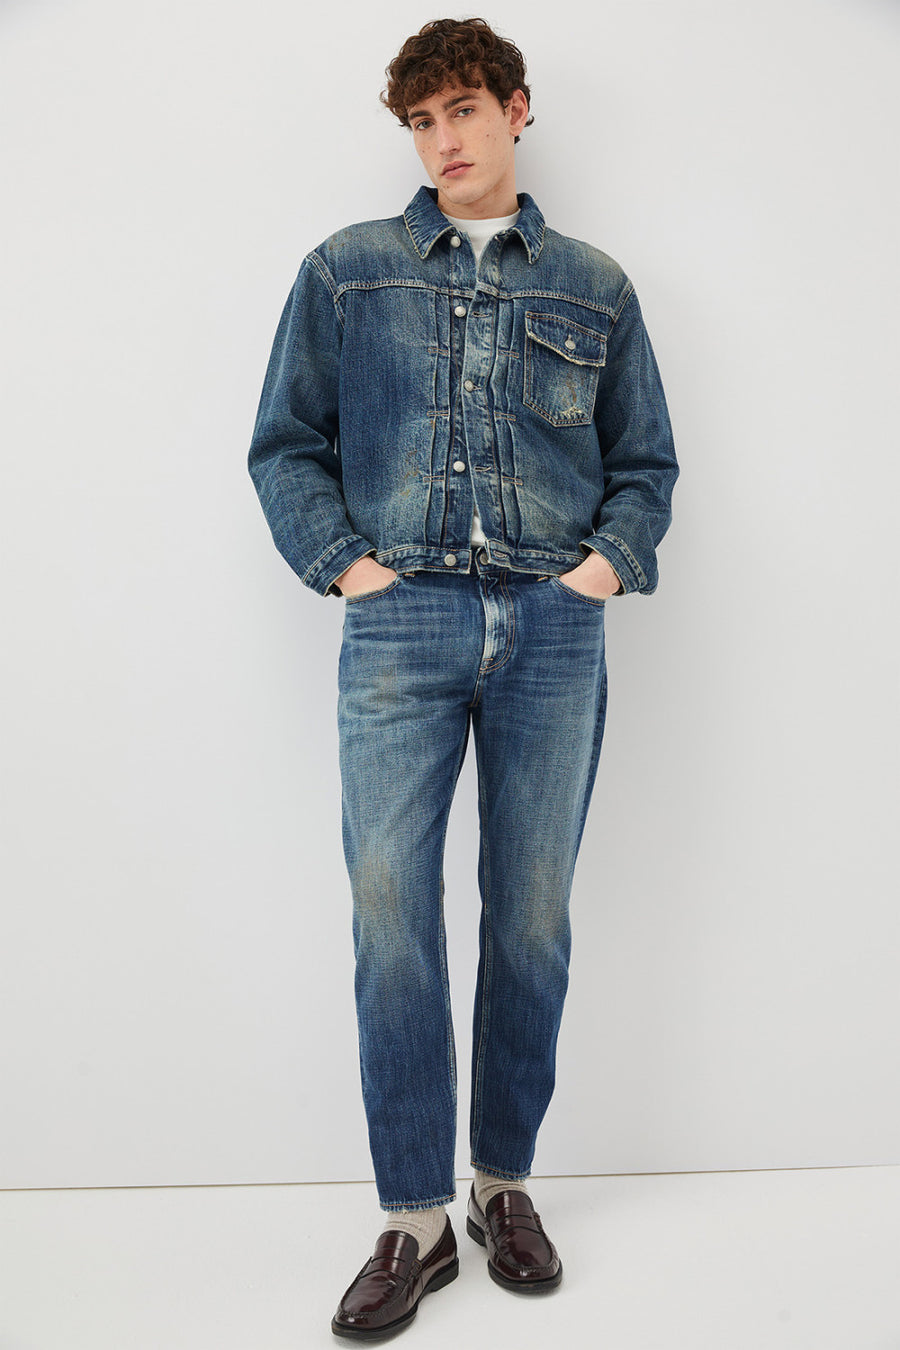 US4-Jeans Dapper Re-Search Timeless Man